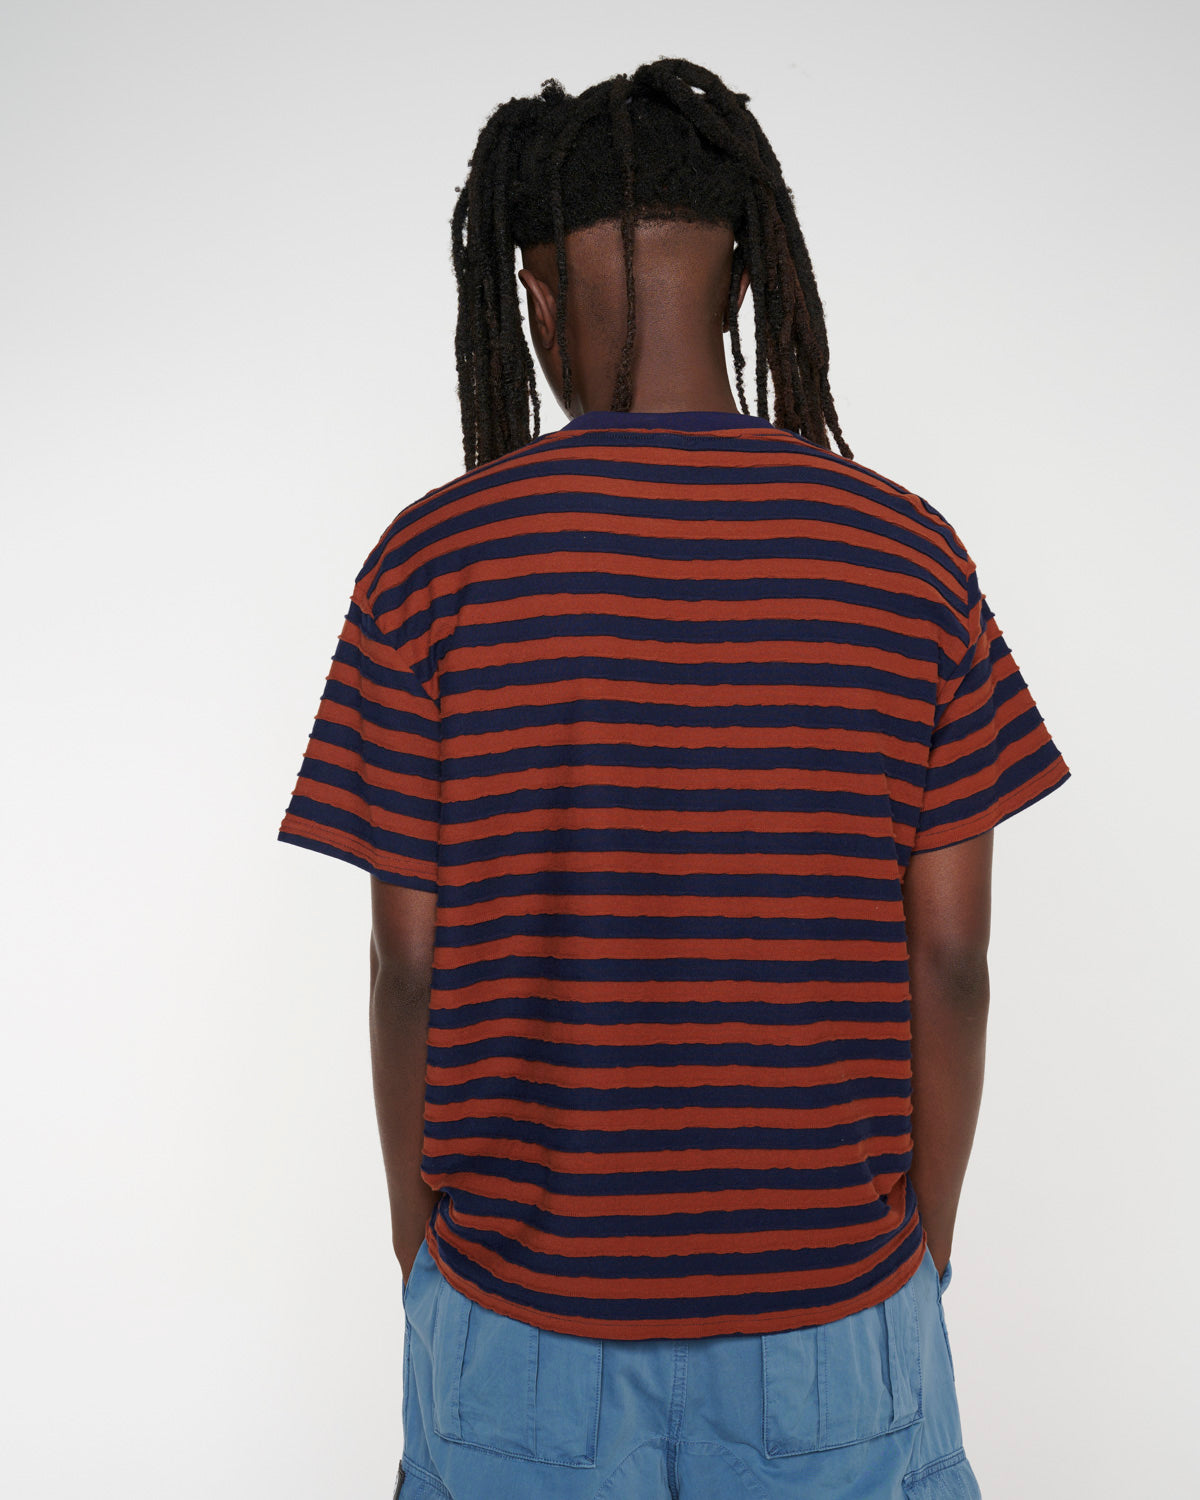 Denny Blaine Striped T-Shirt - Navy/Light Brown 6